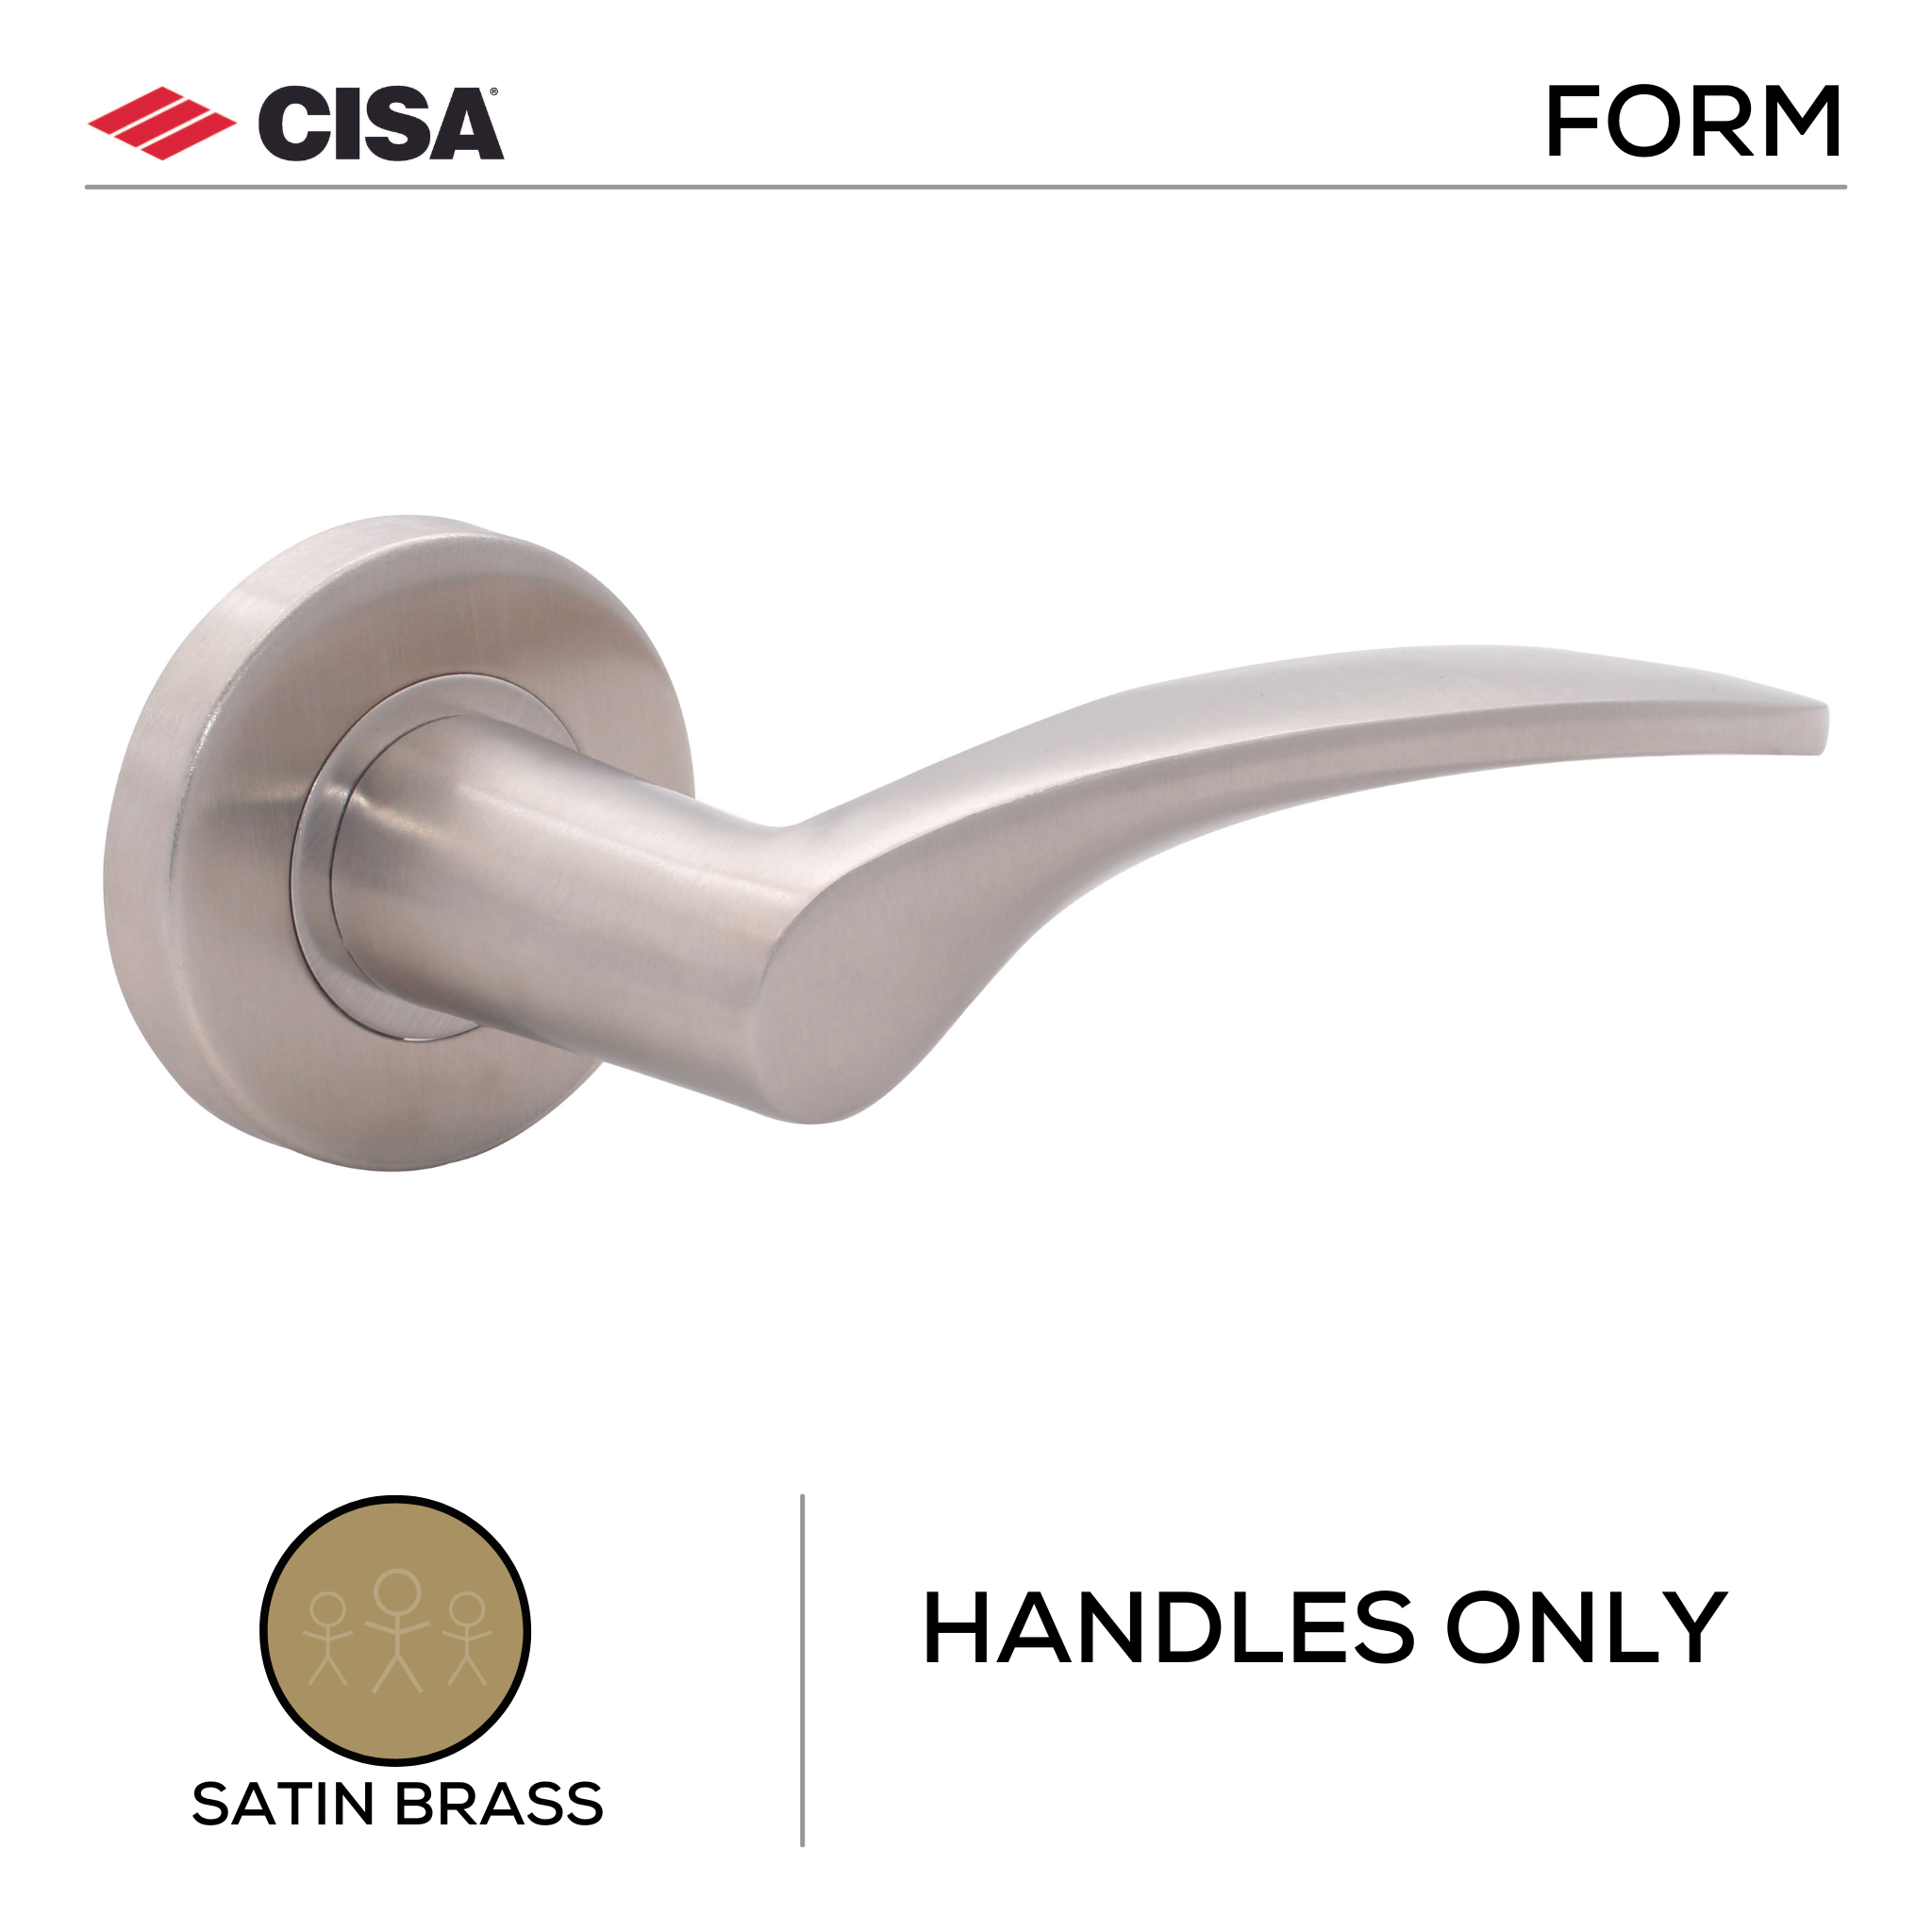 FS116.R.SB, Lever Handles, Form, On Round Rose, Handles Only, Satin Brass, CISA